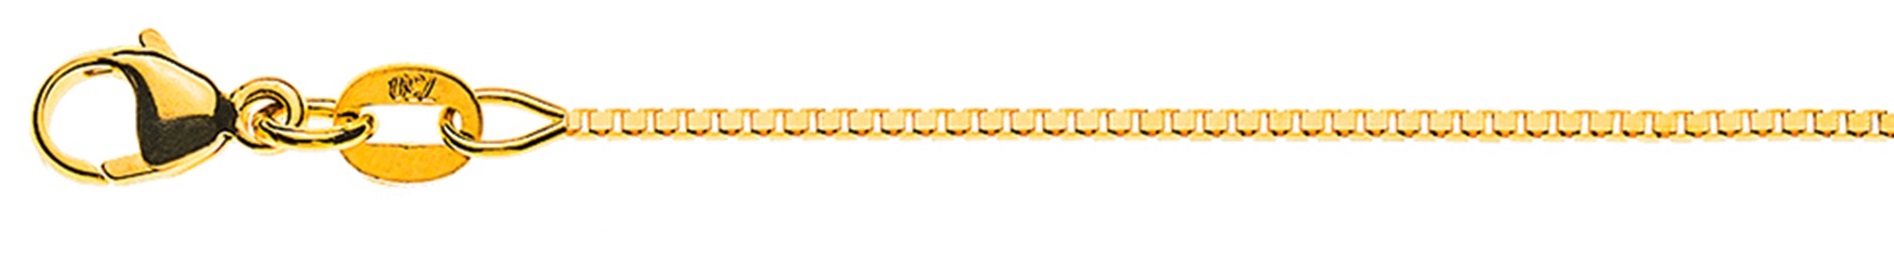 AURONOS Élégance Halskette Gelbgold 14K Venezianerkette diamantiert 55cm 0.9mm